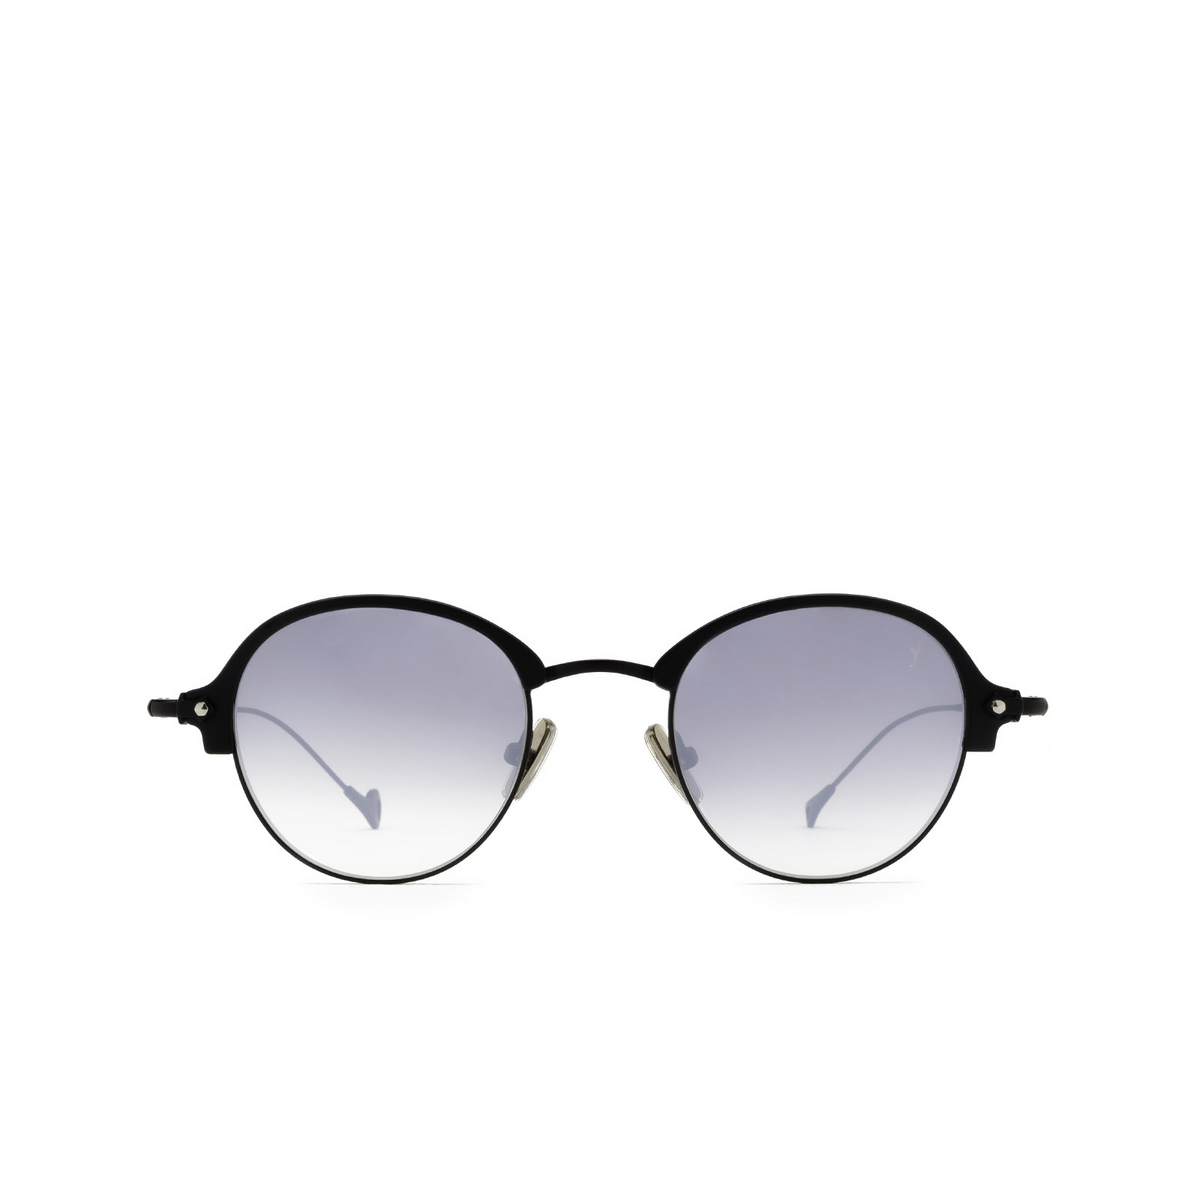 Eyepetizer® Round Sunglasses: Robert color Black Matt C.A-6-27F - front view.